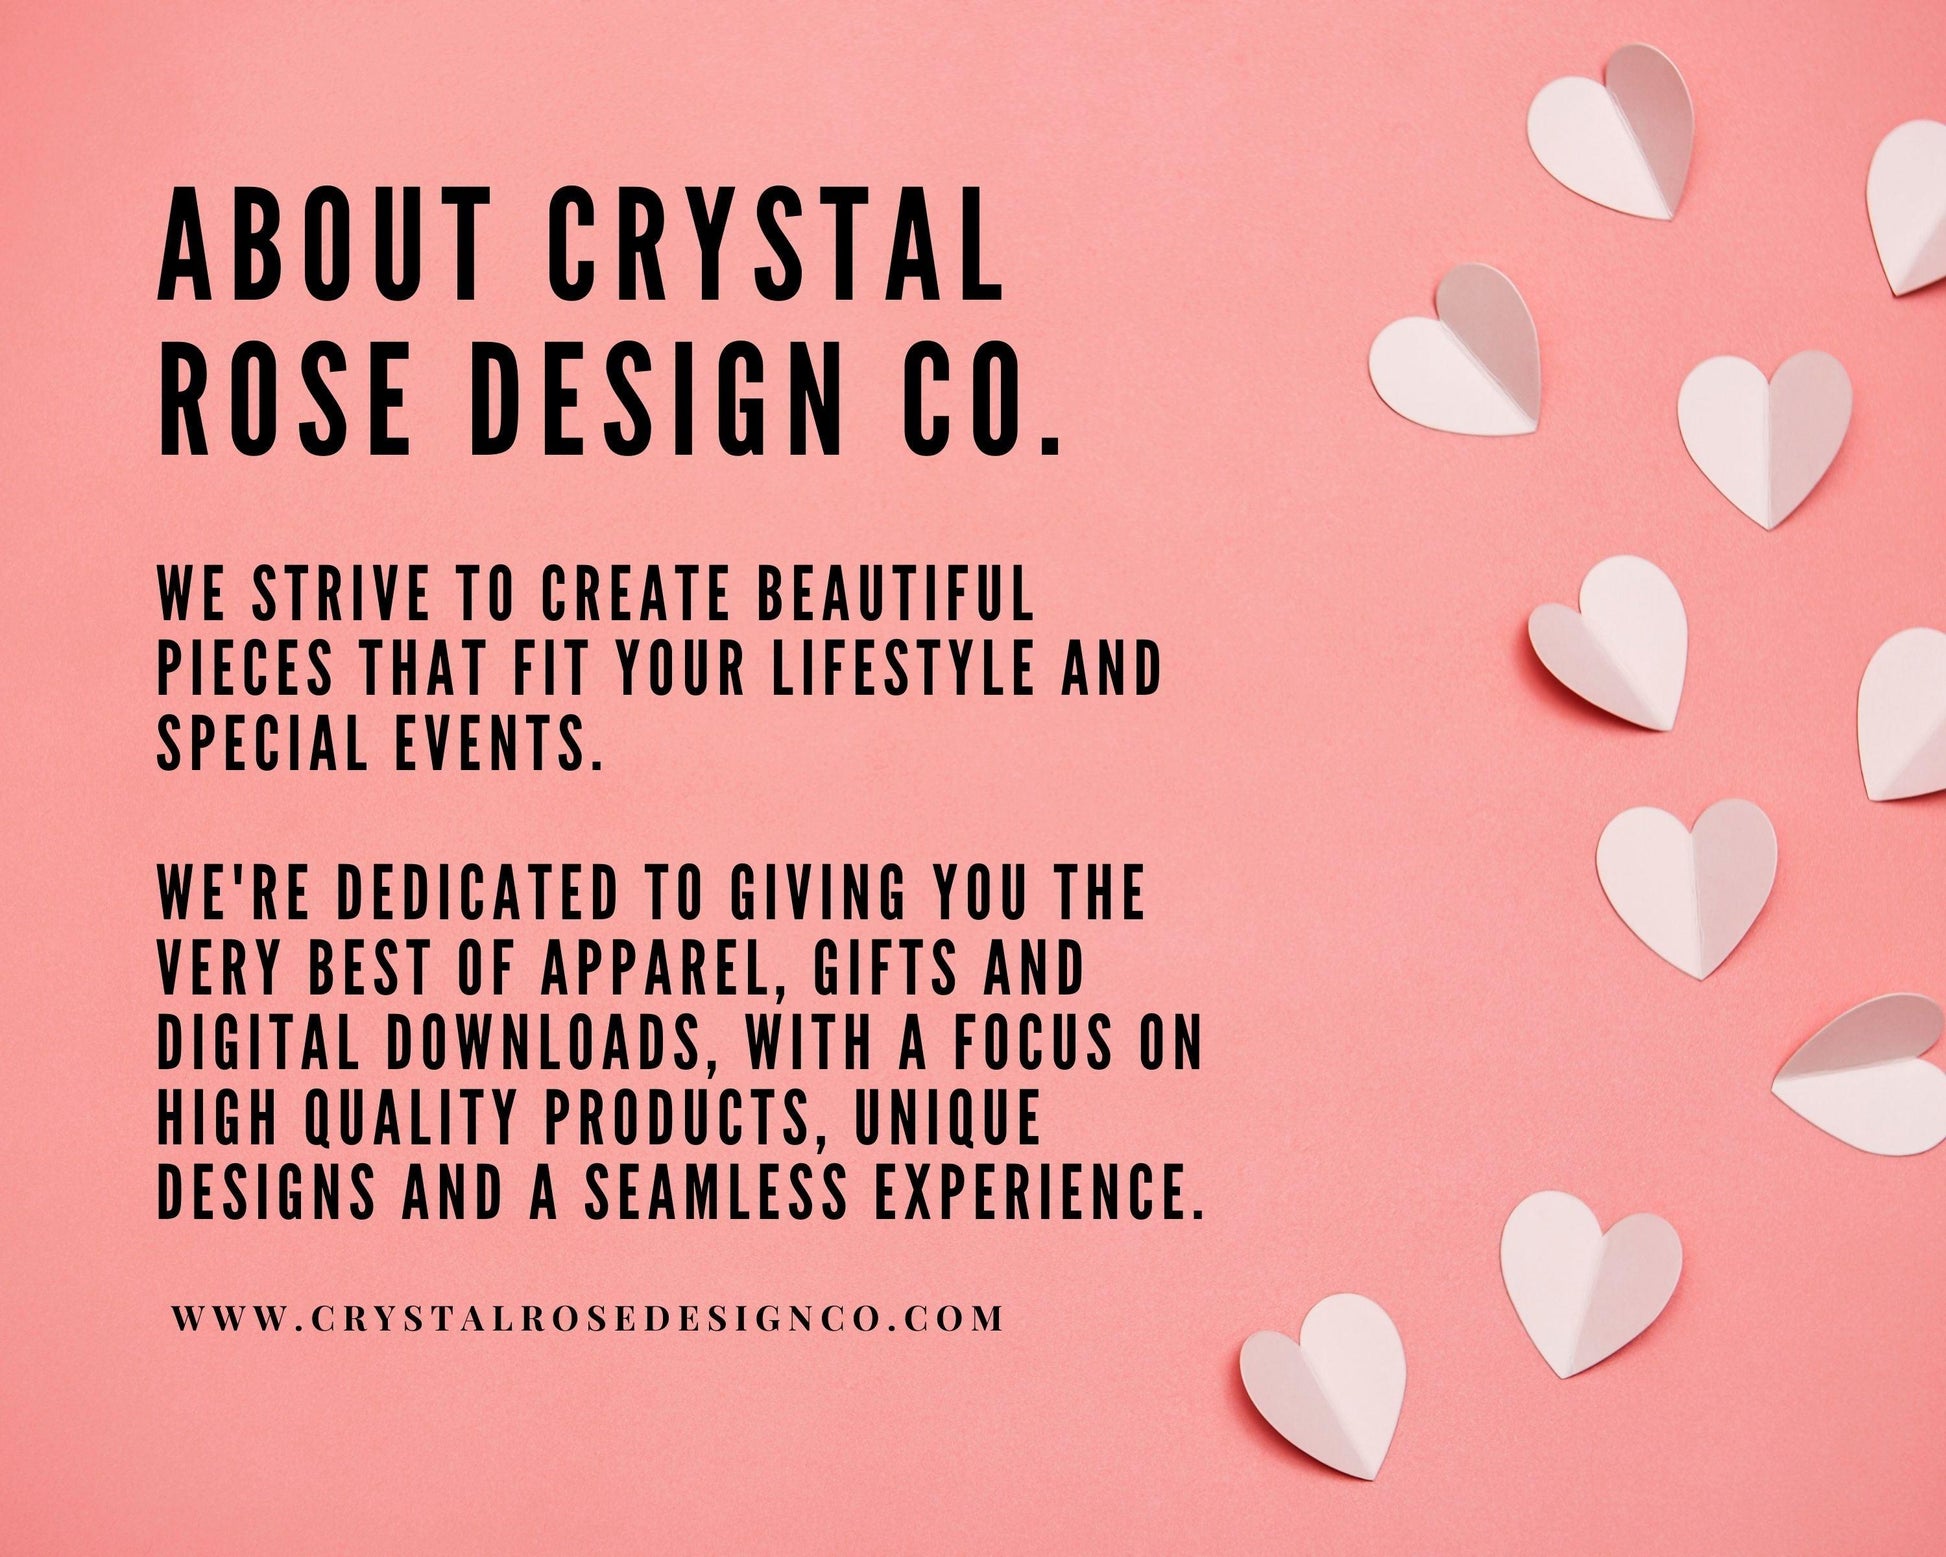 Bride Short Sleeve Tee - Crystal Rose Design Co.